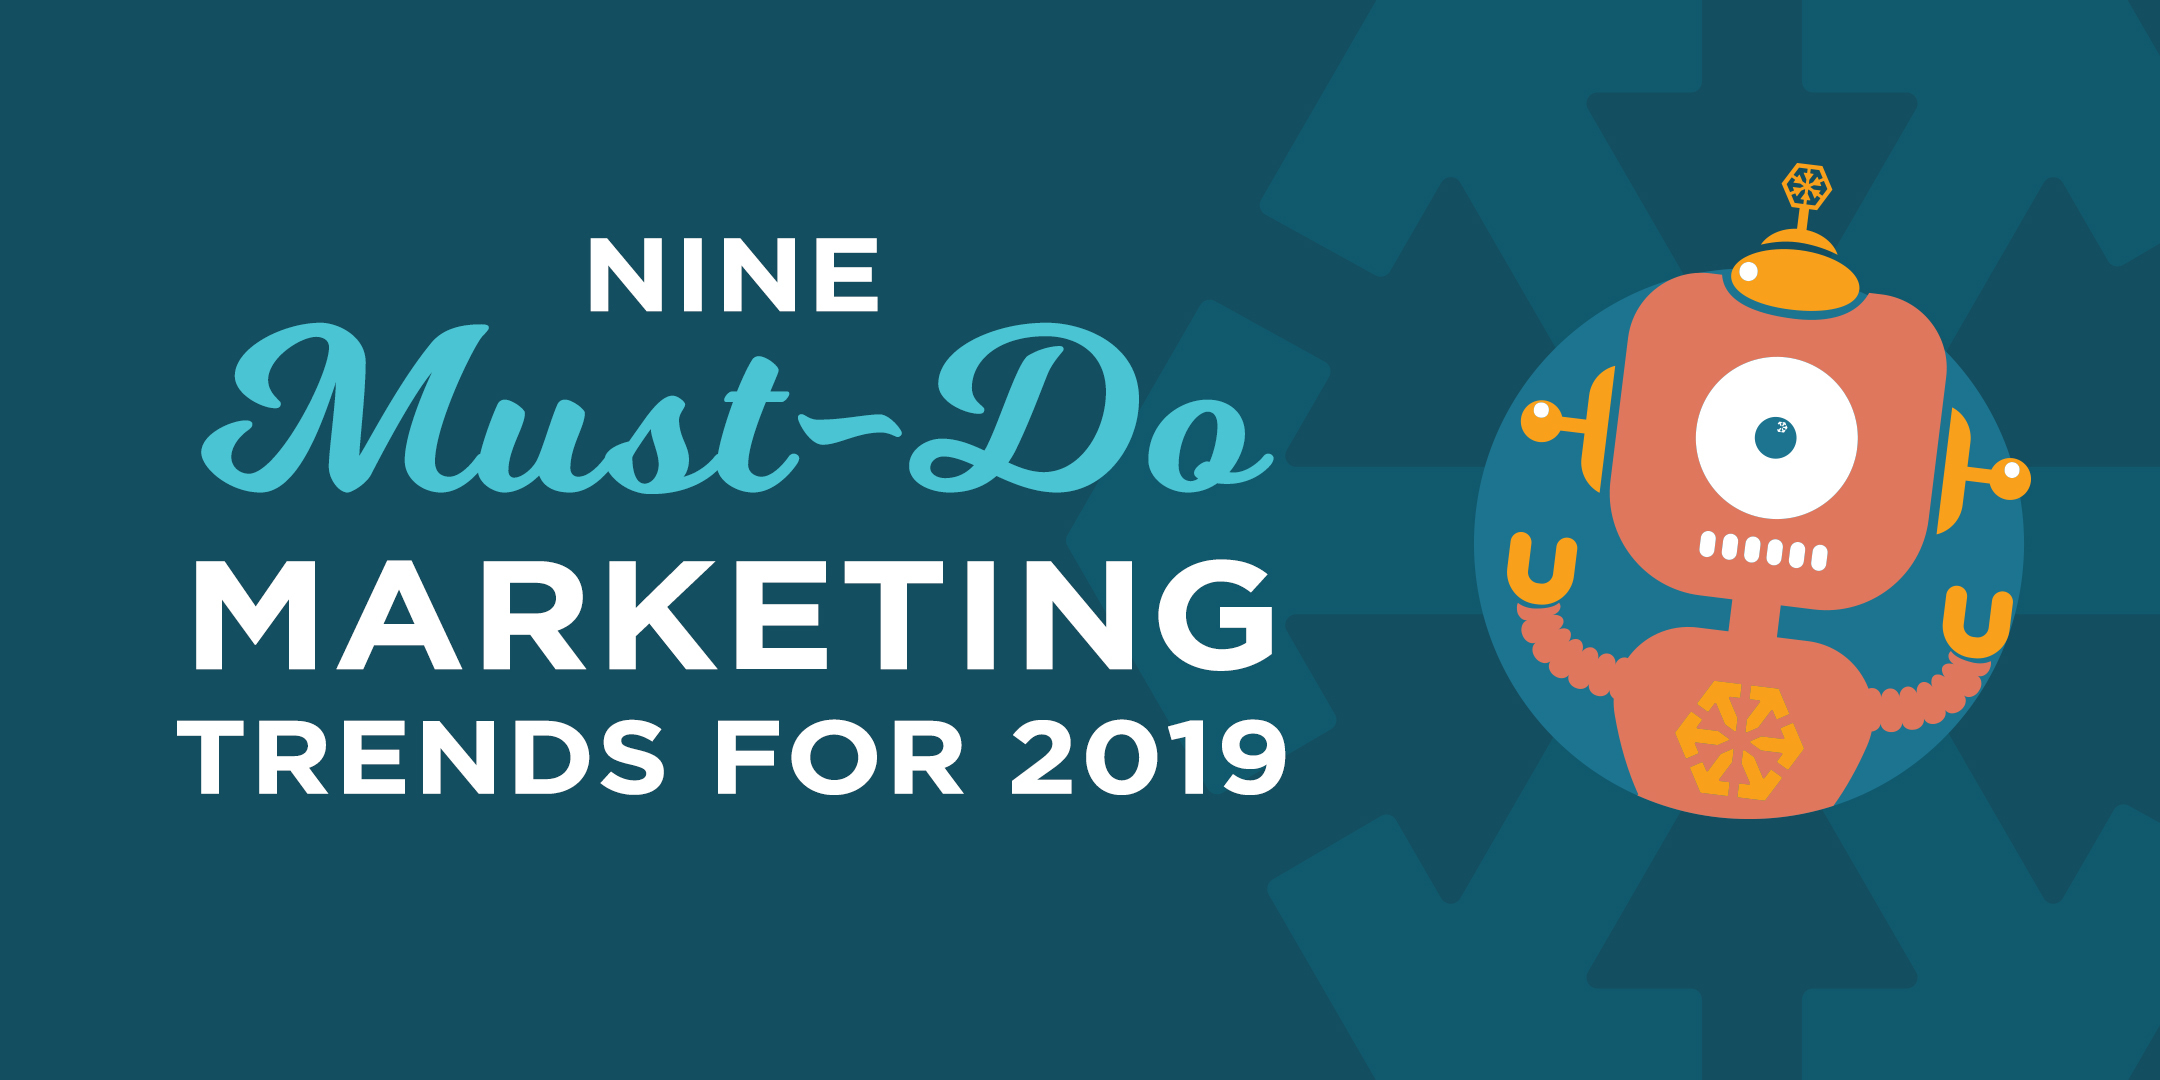 Nine Must-Do Marketing Trends in 2019